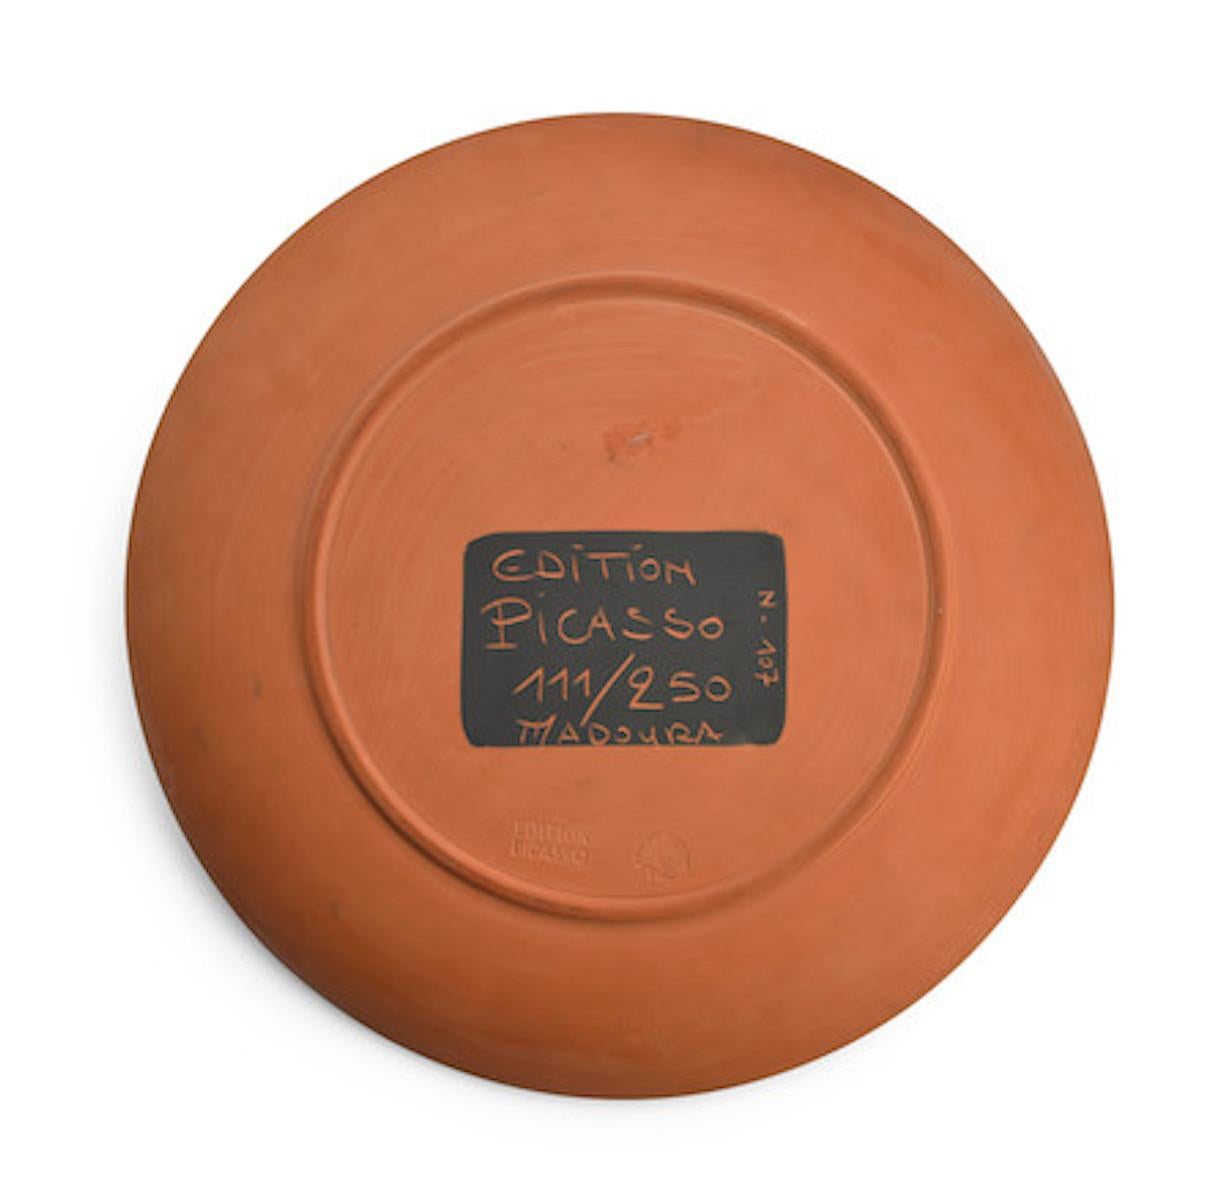 picasso ceramic plate value